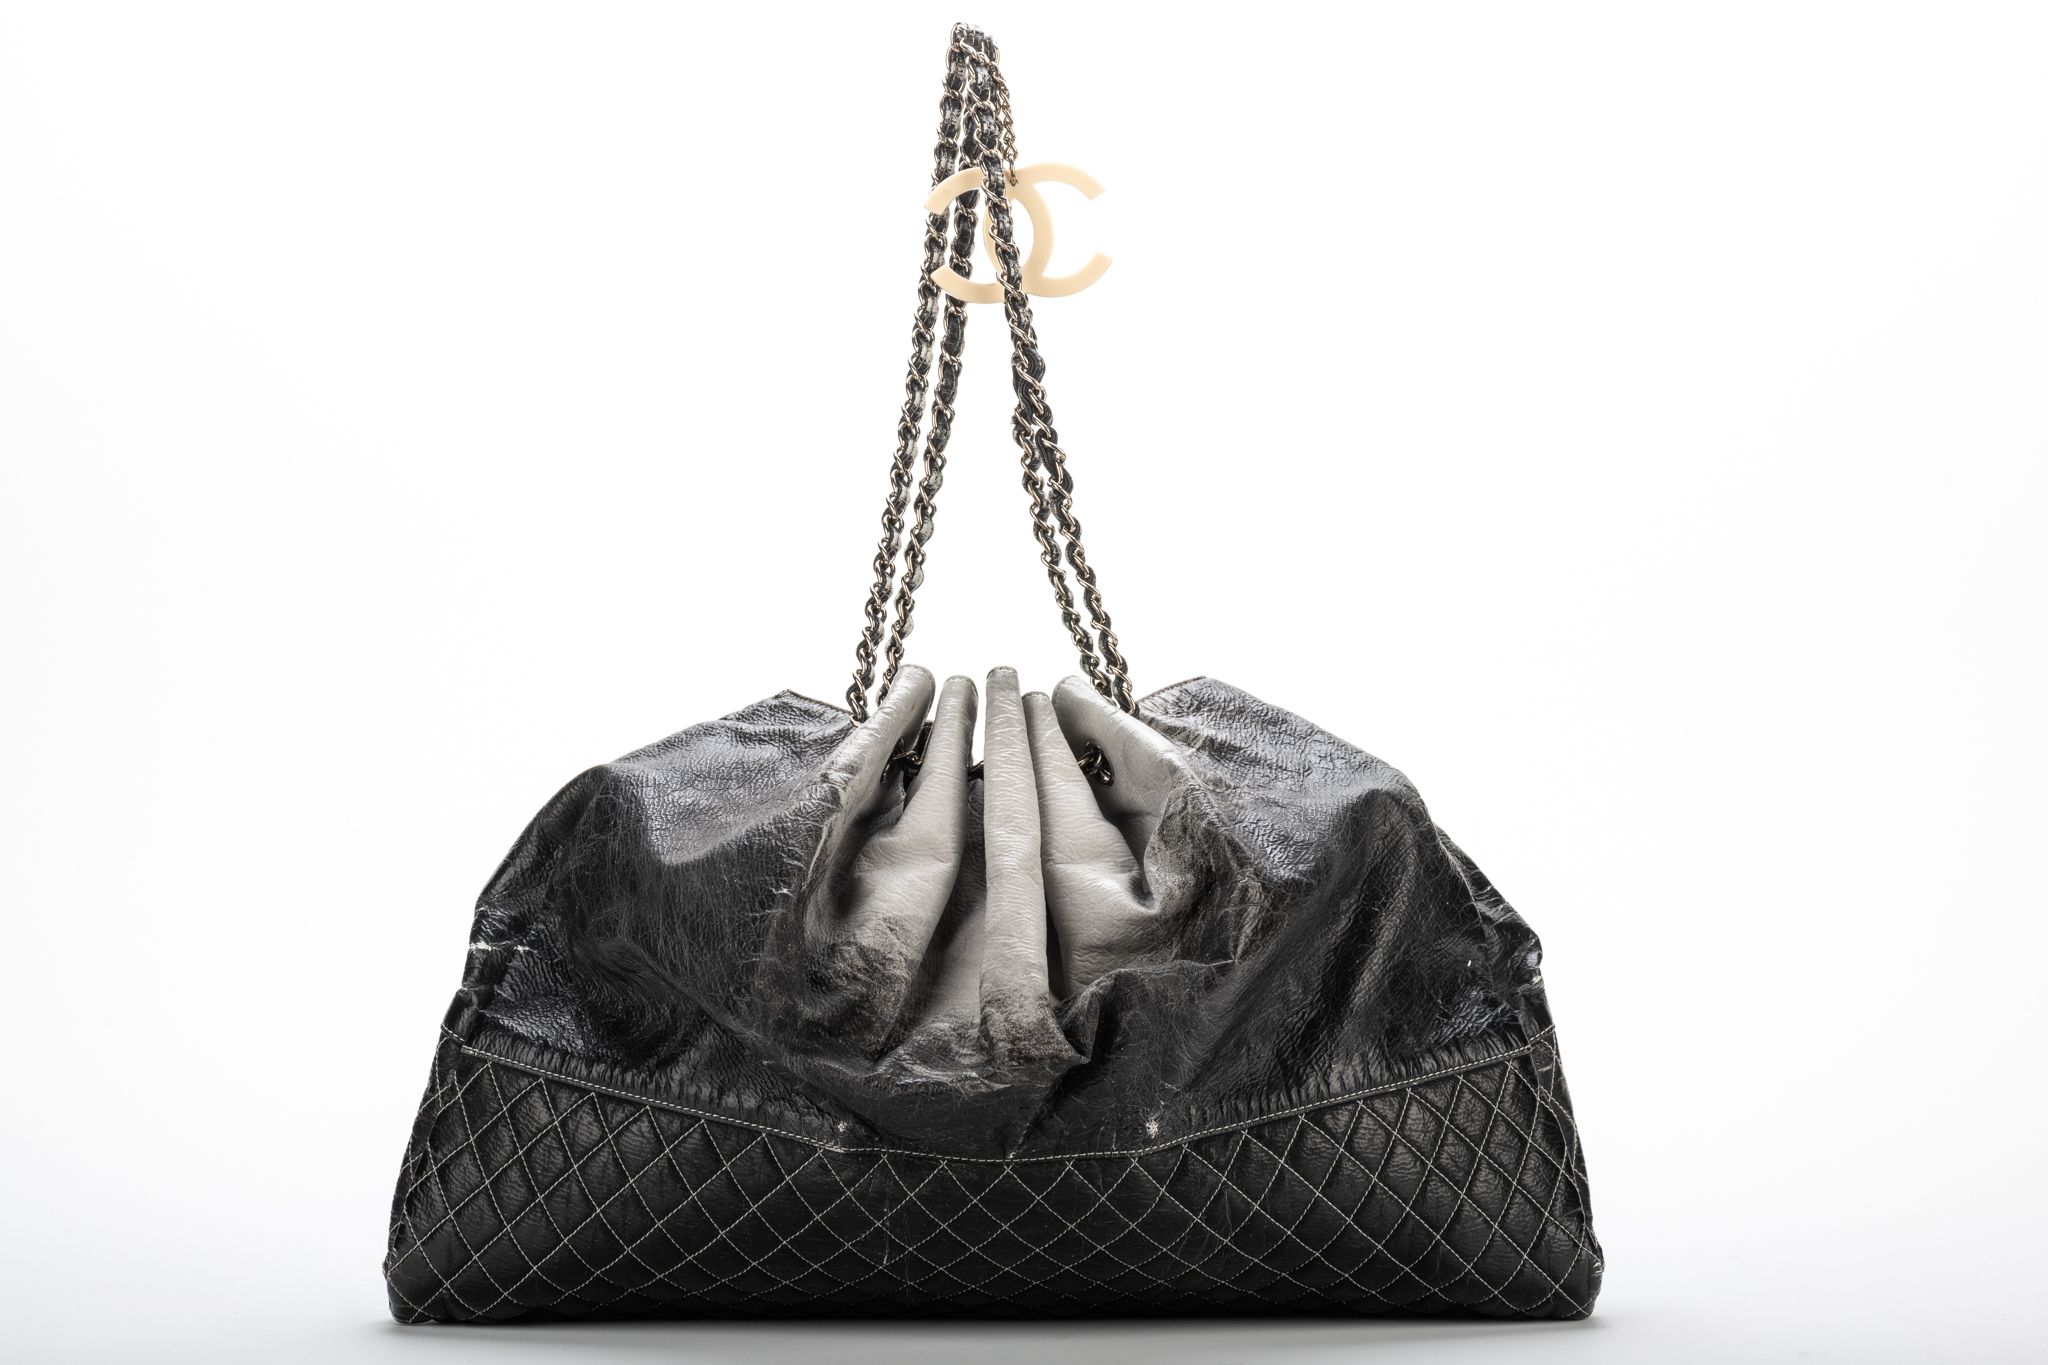 GABRIELLE de CHANEL large hobo bag IN BLACK DEGRADE LEATHER Patent